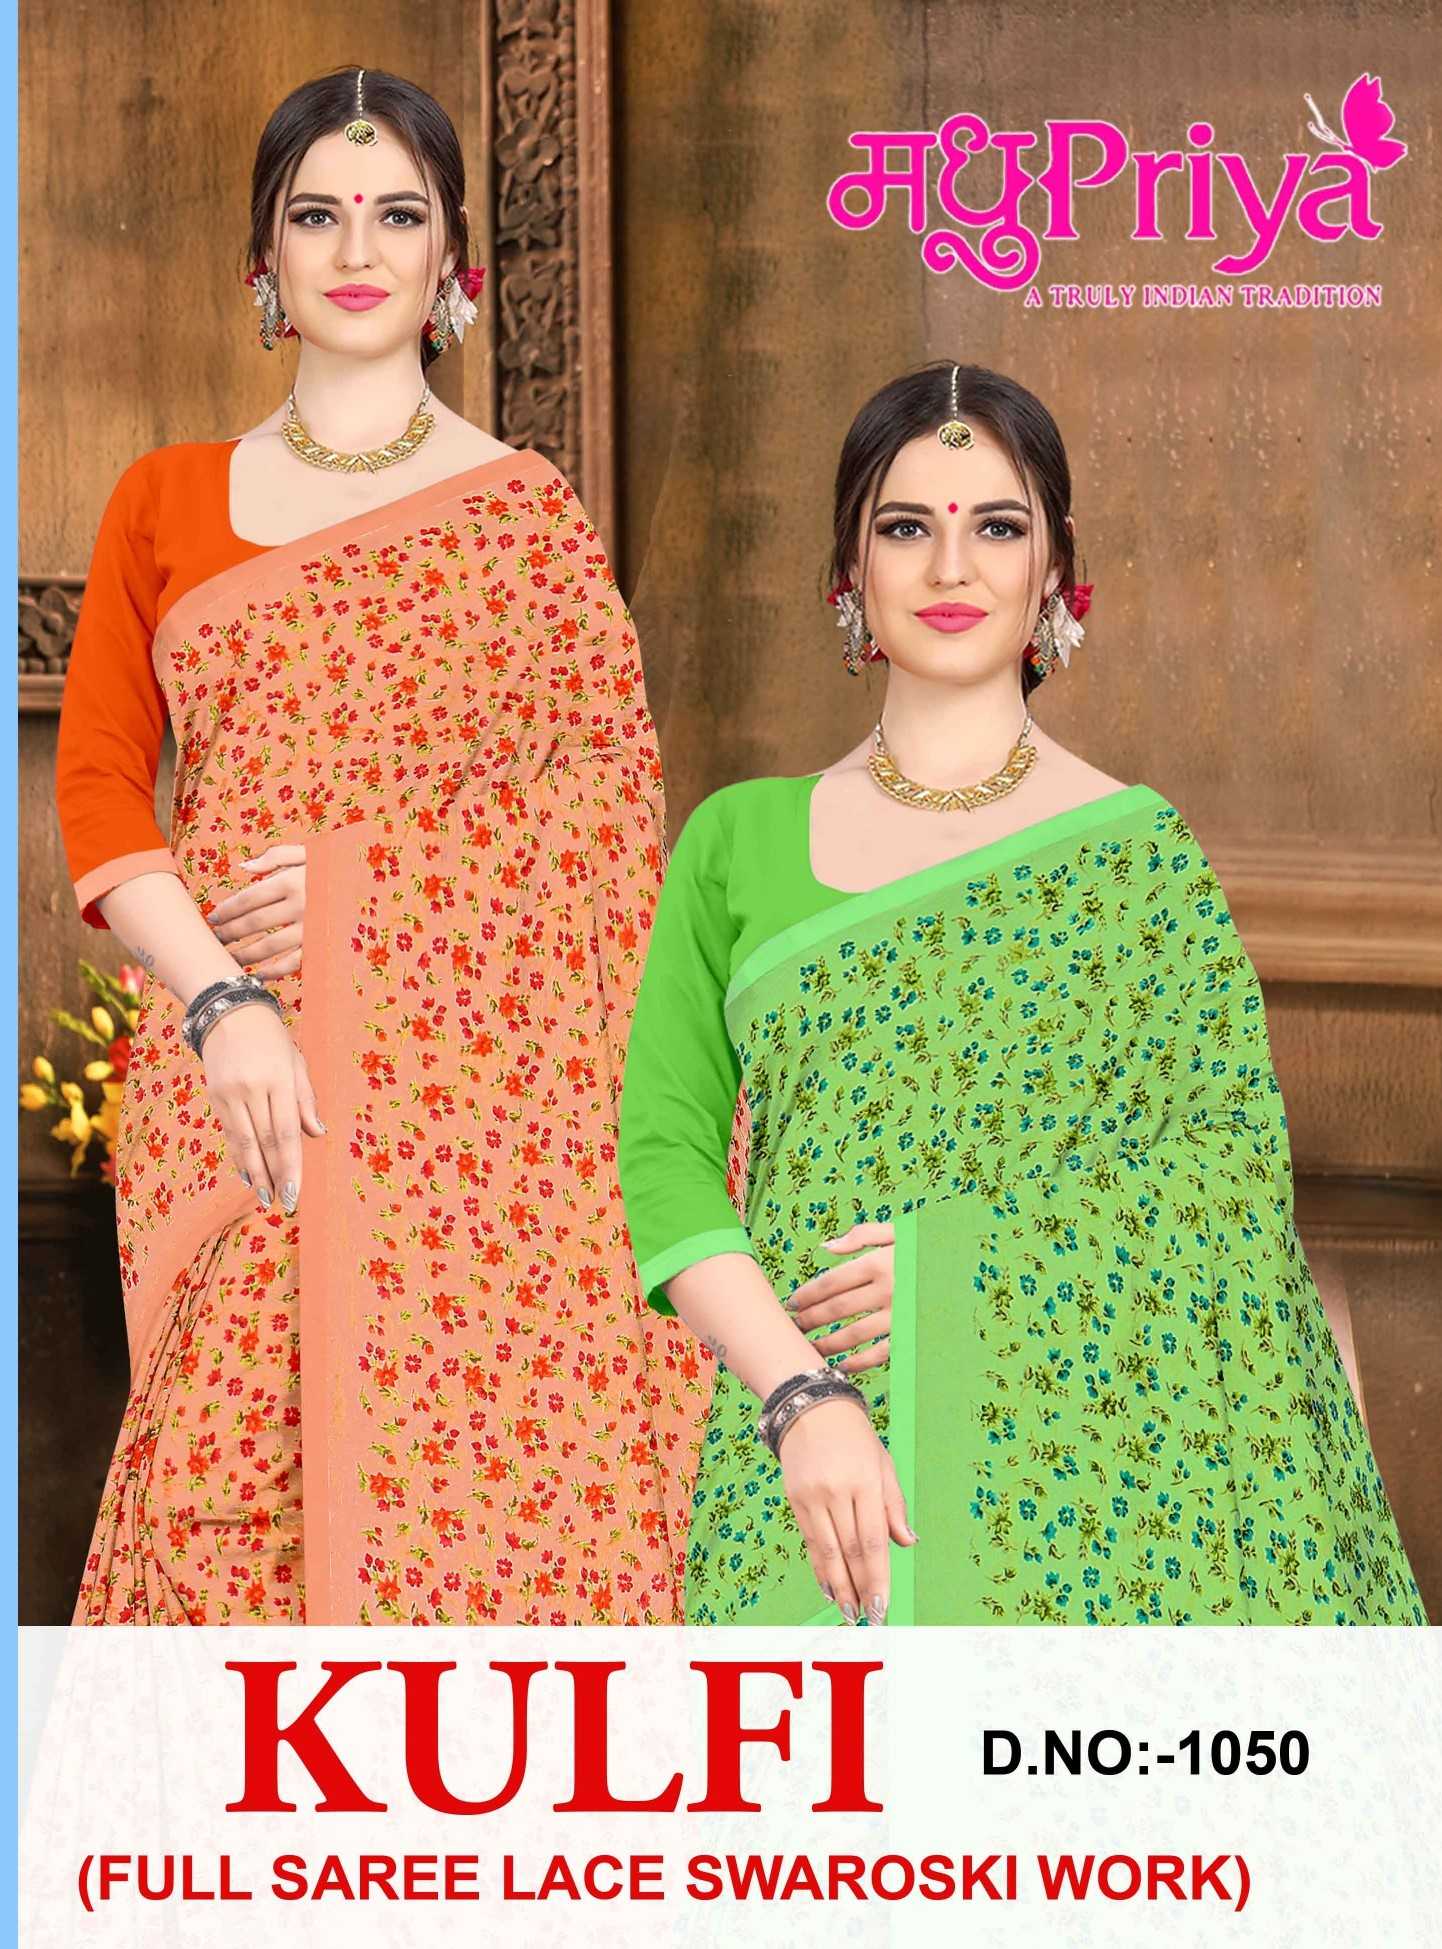 madhupriya kulfi 1050 fancy chiffon sarees at cheap rate